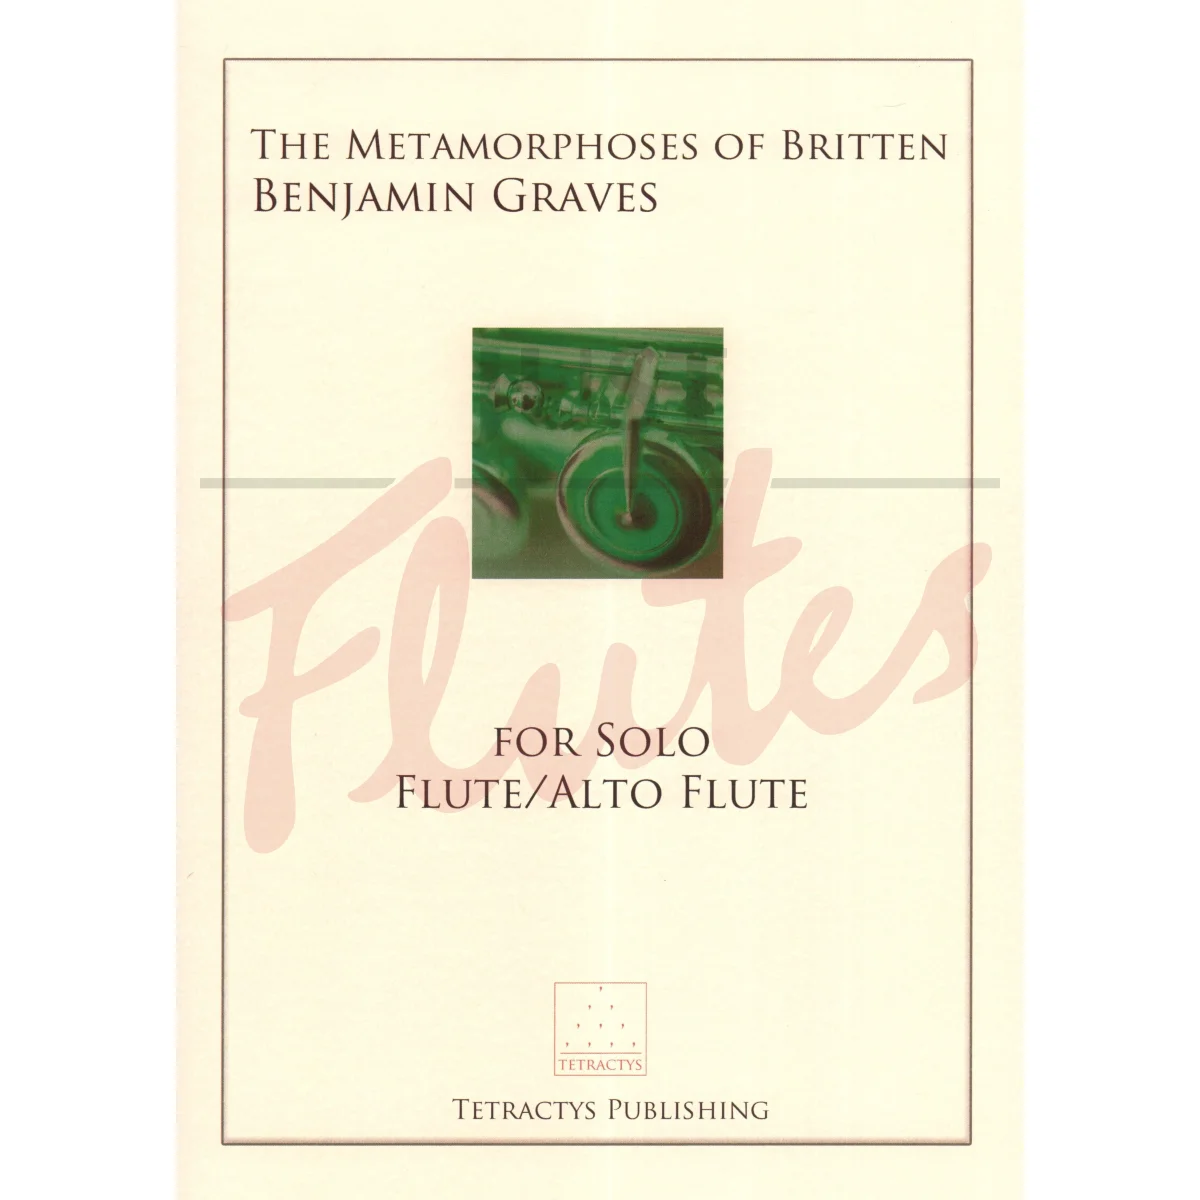 The Metamorphoses of Britten for Solo Flute/Alto Flute